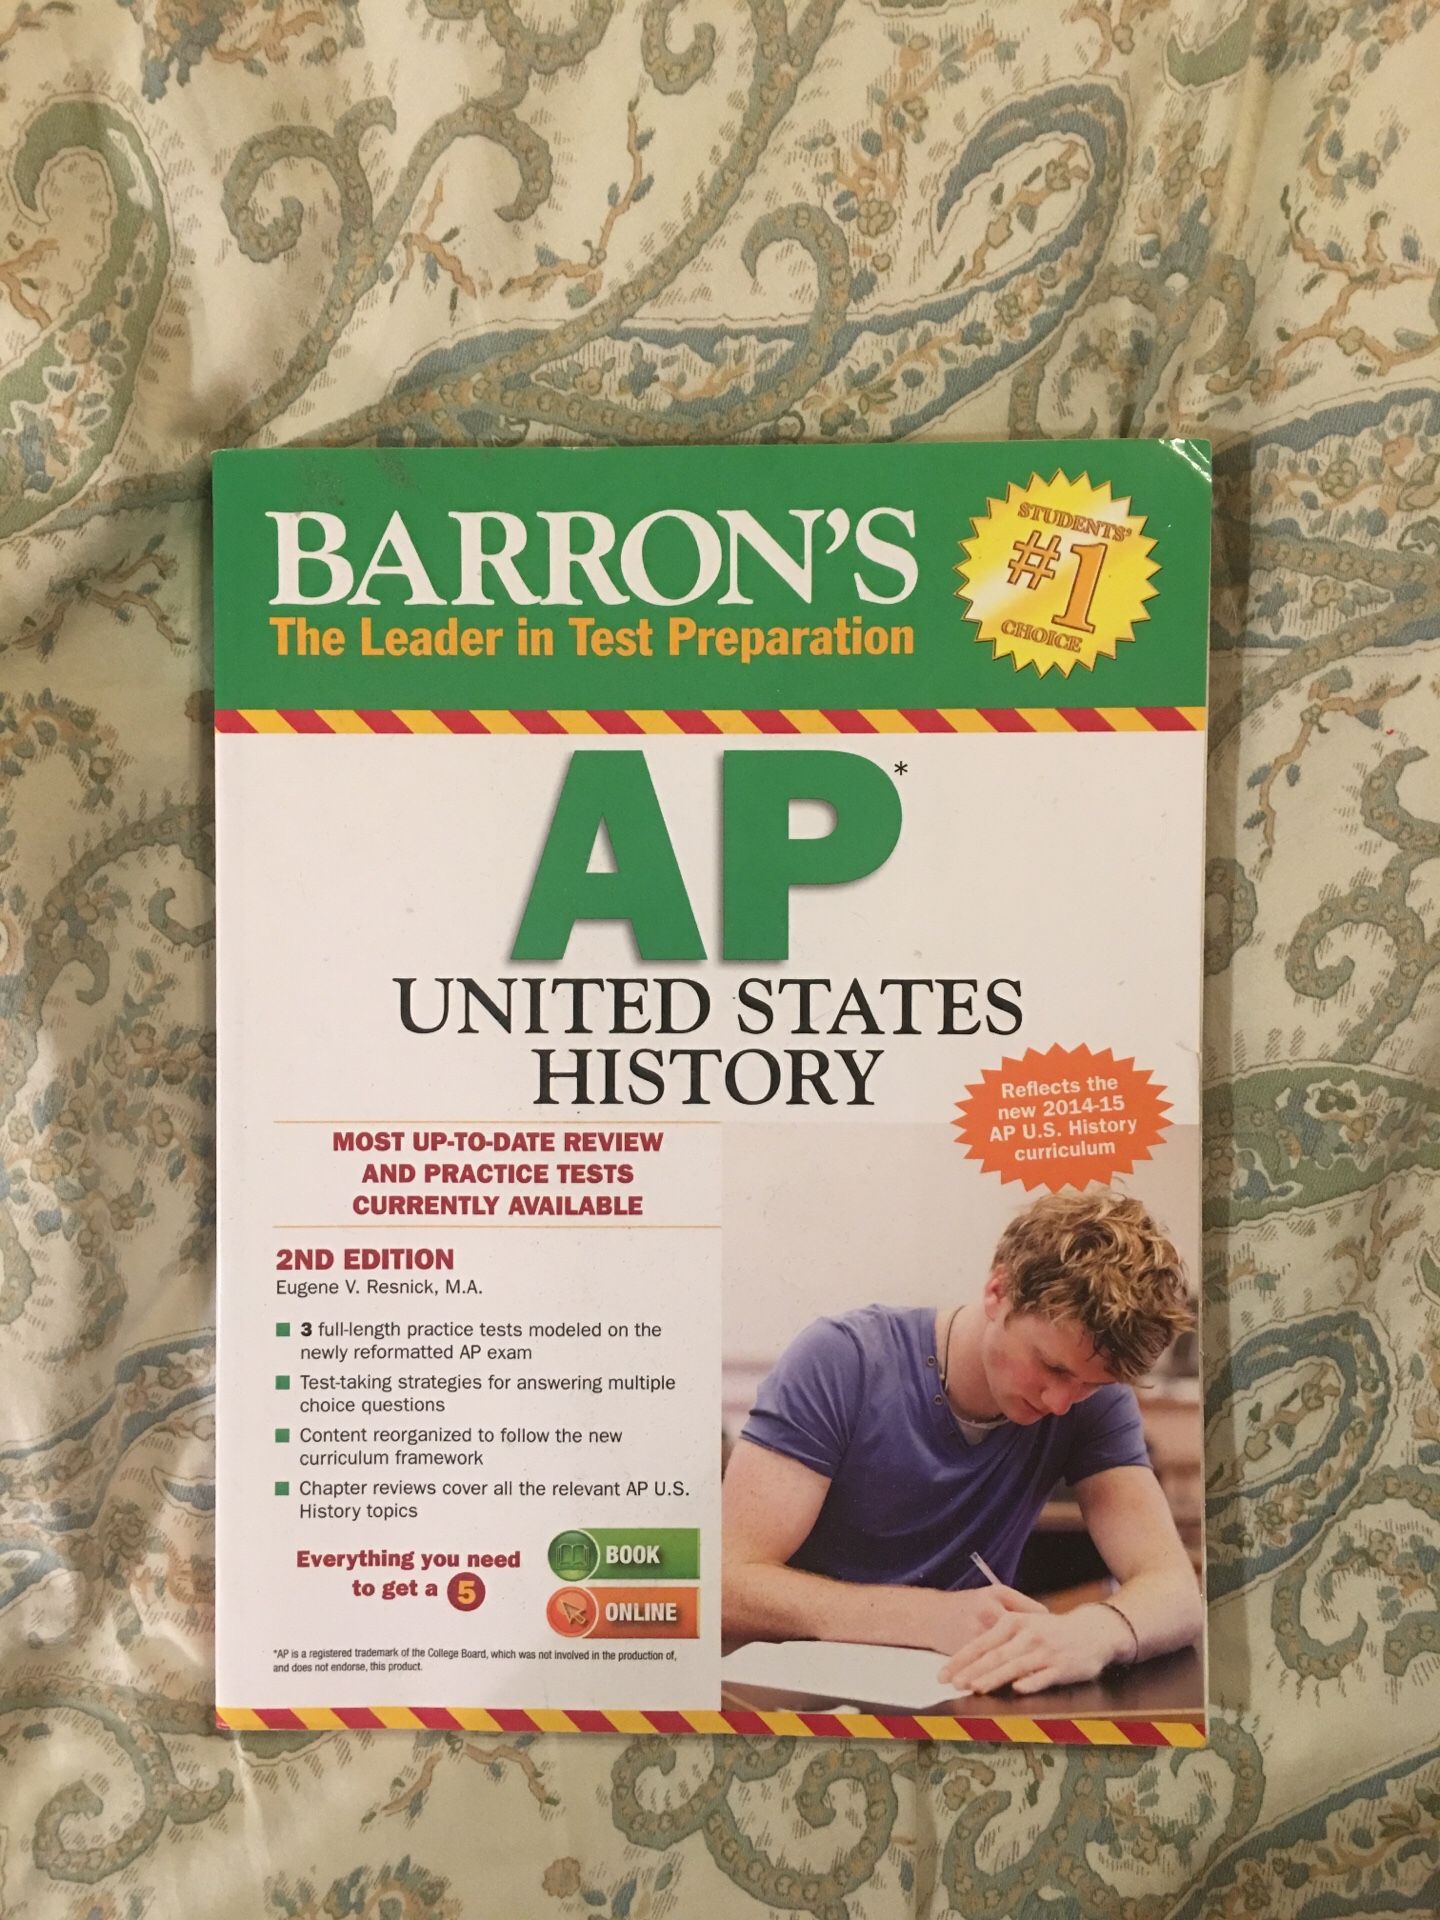 AP US History review book